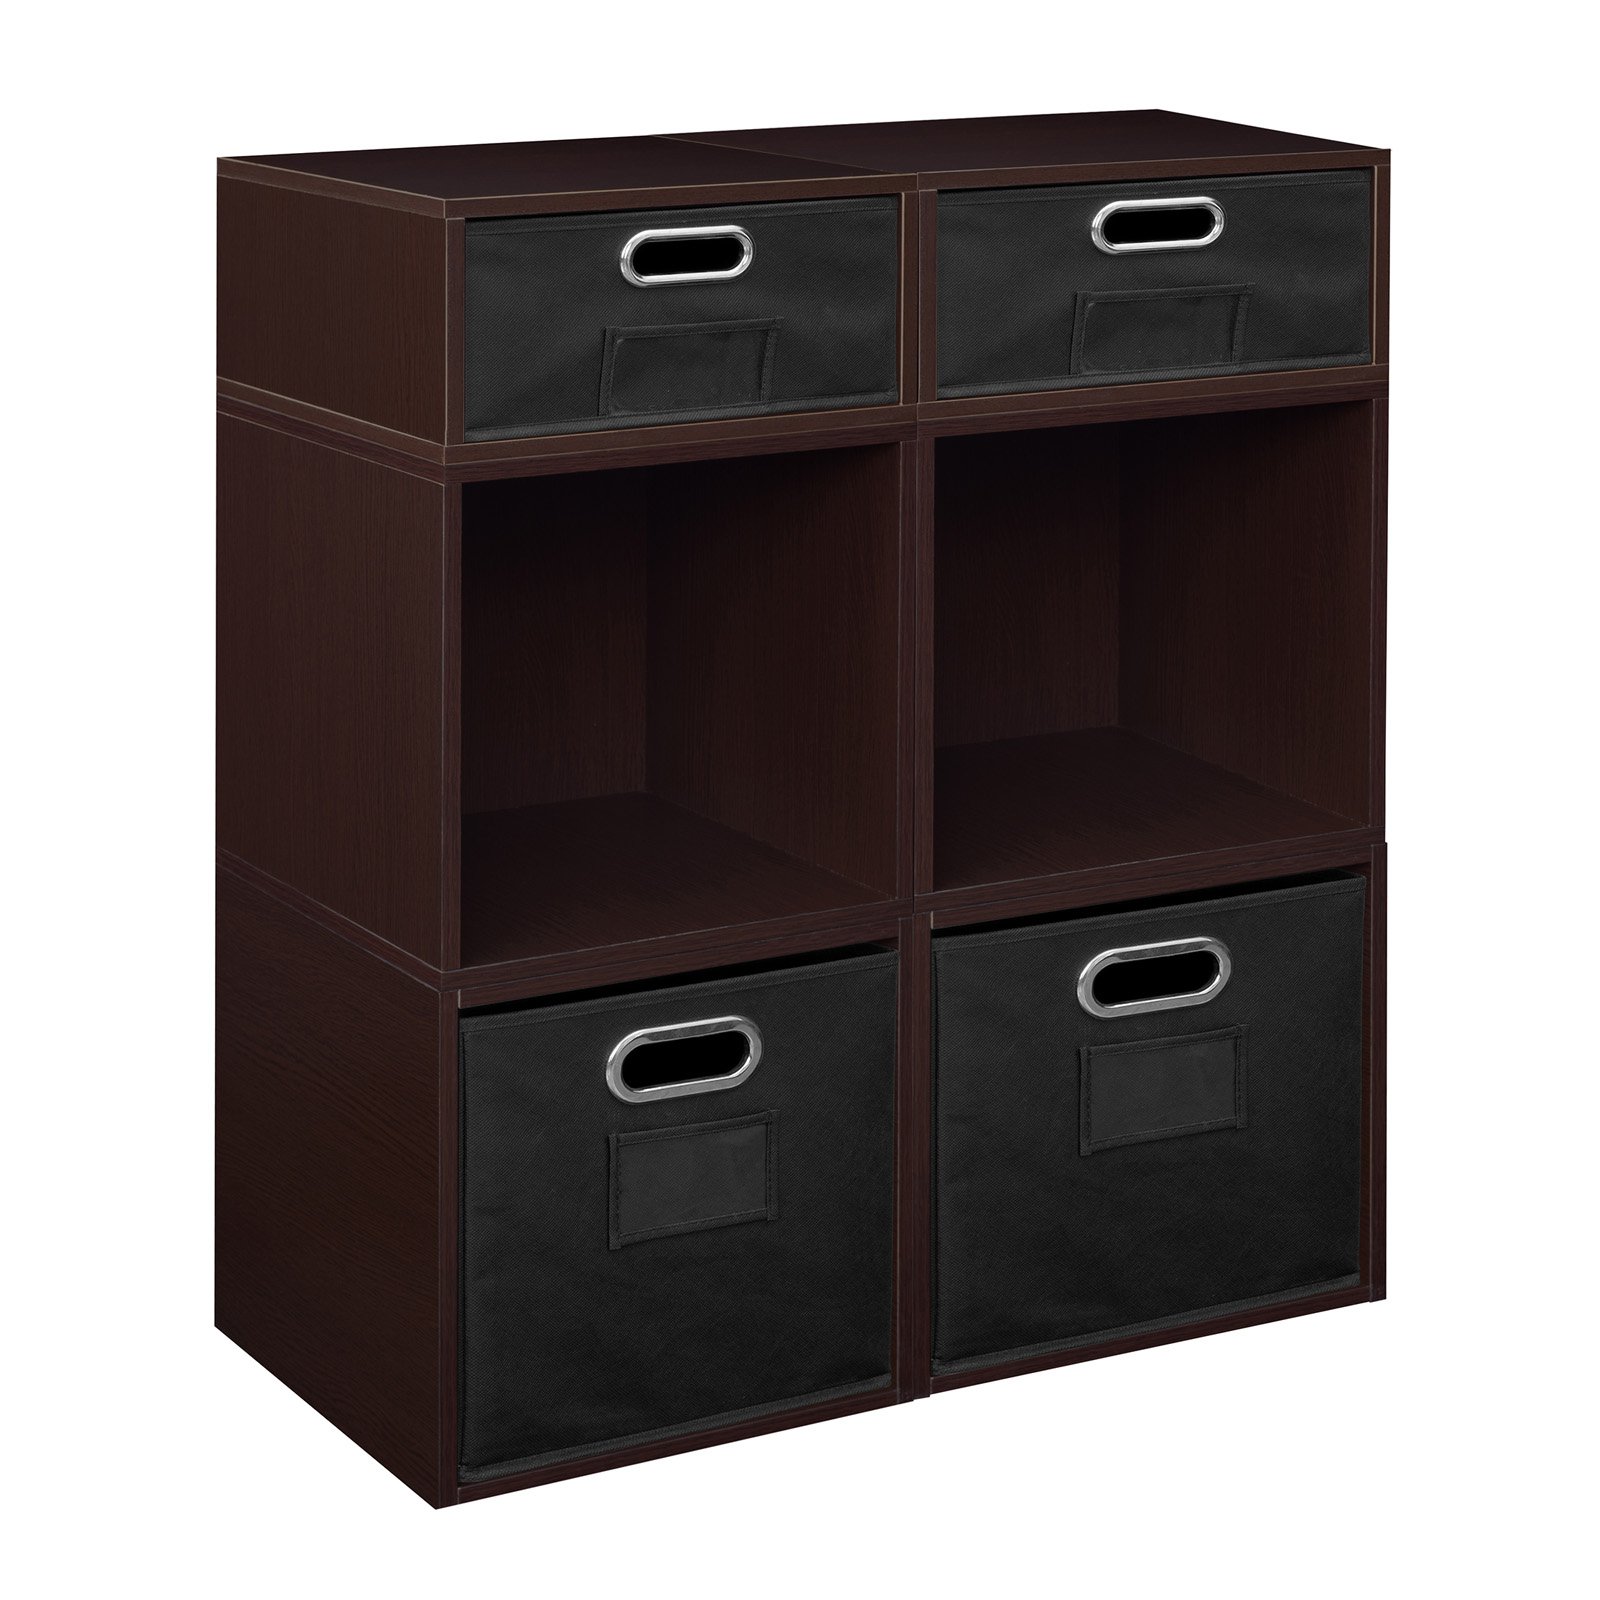 Regency Niche Cubo Modular Storage Shelf with Optional 4 Full and 2 Half Sized Folding Storage Bins - image 2 of 10